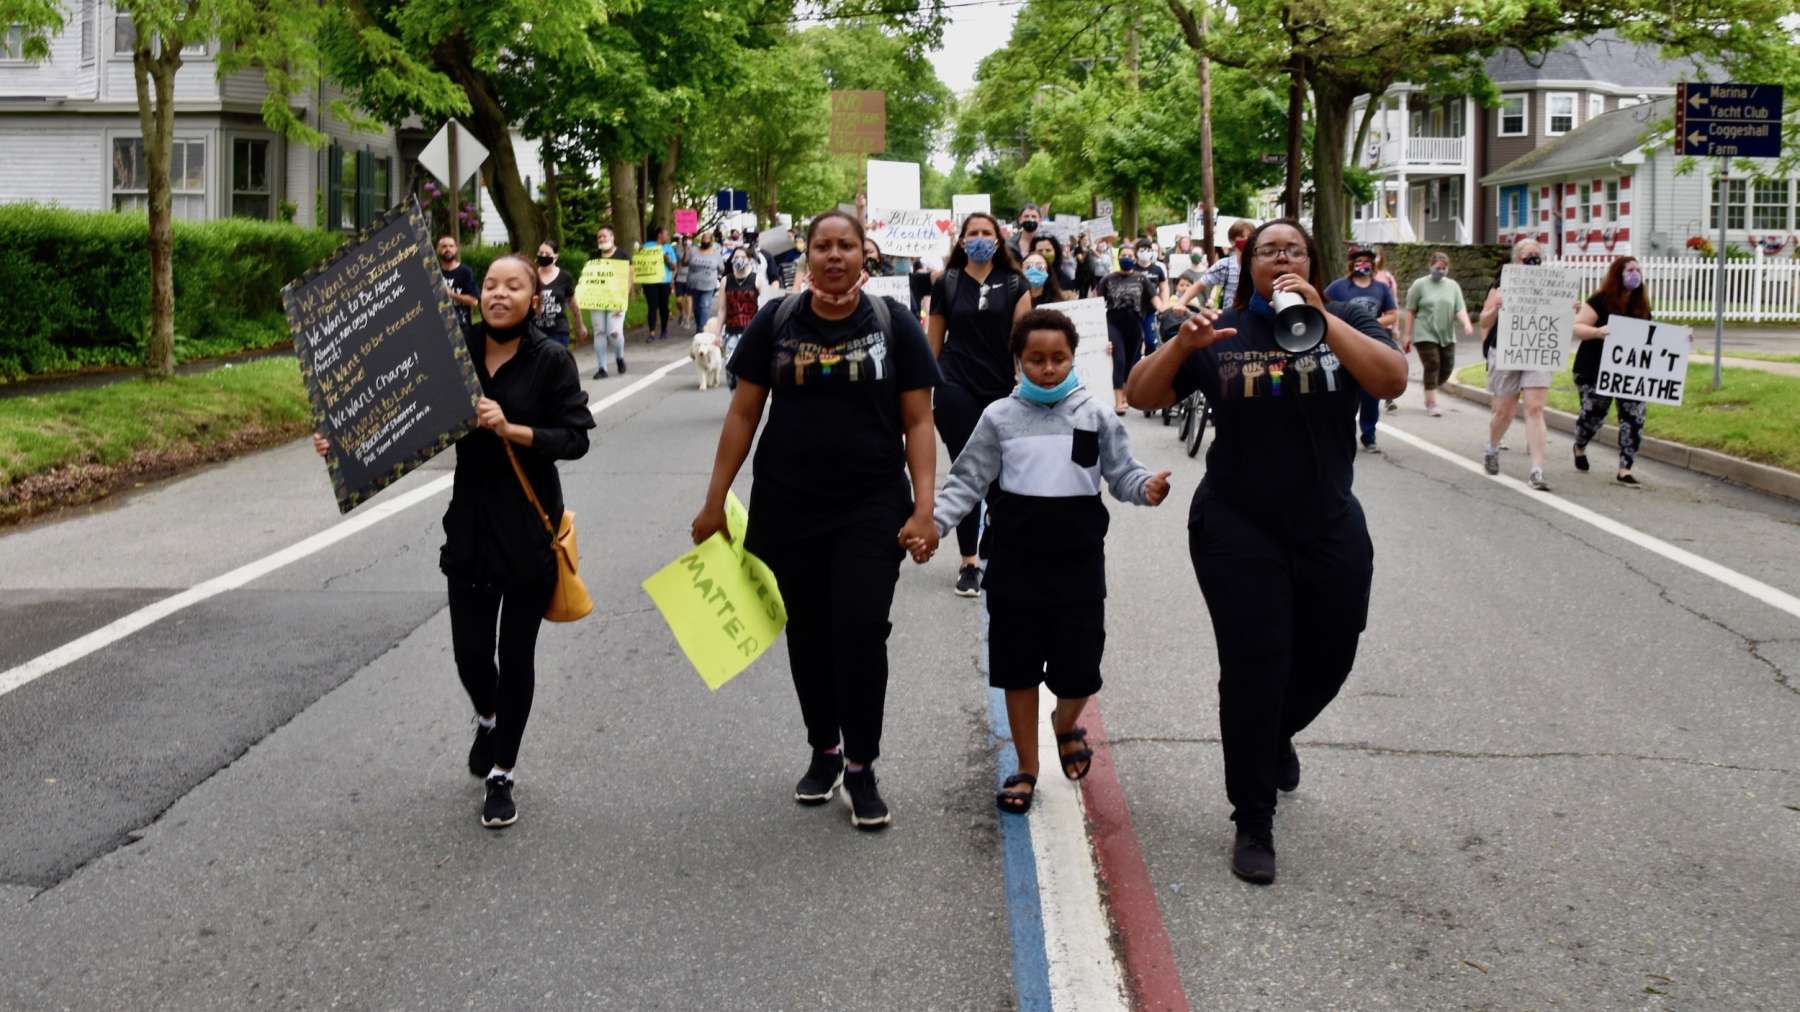 Rhode Island News: Black Lives Matter march in Bristol draws huge crowd